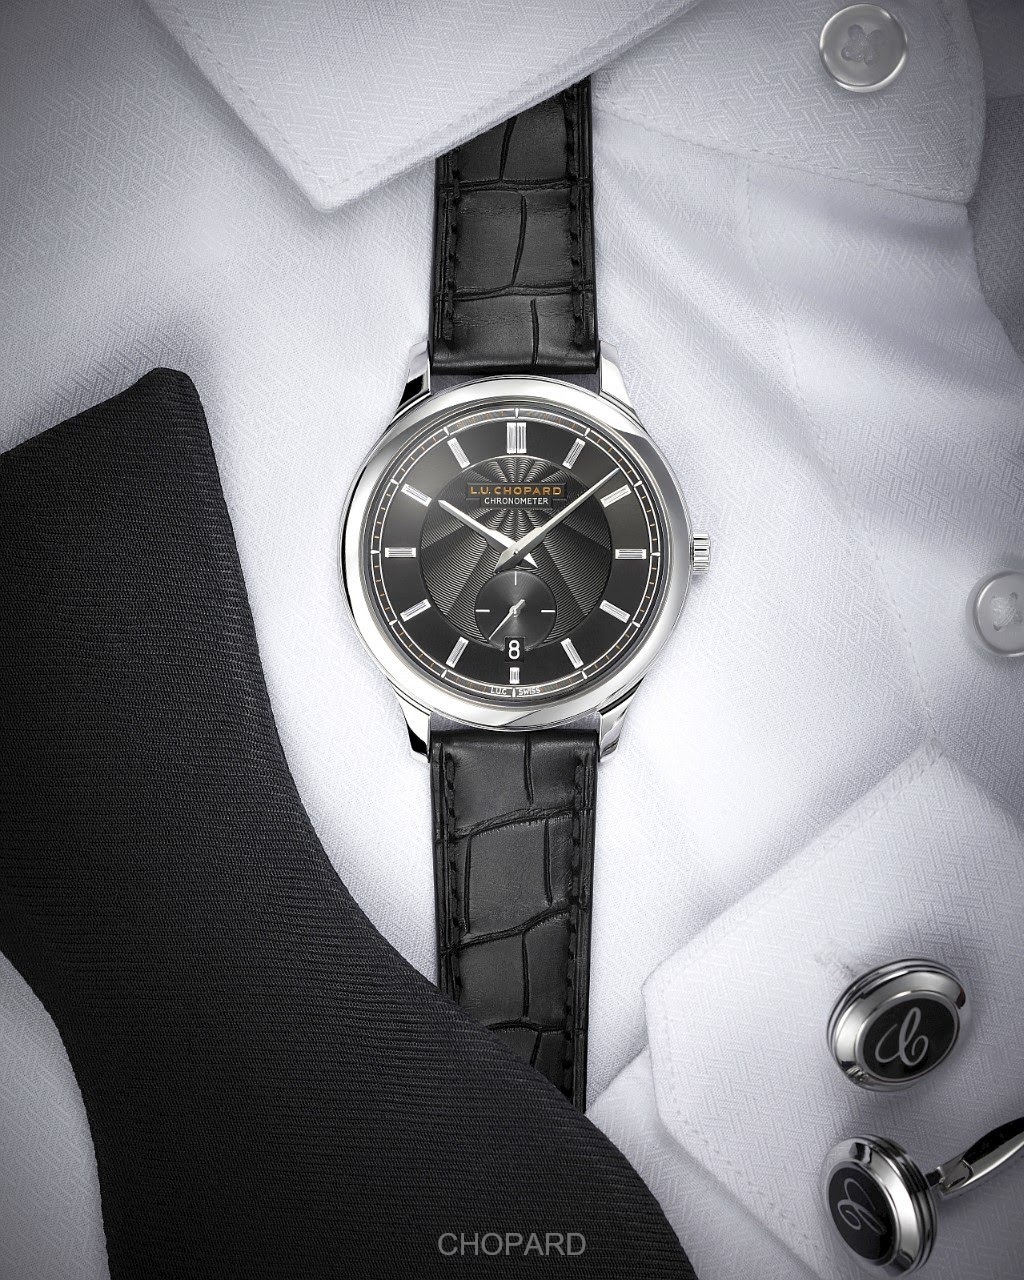 The L.U.C XPS watch models by Chopard for the modern gentlemen